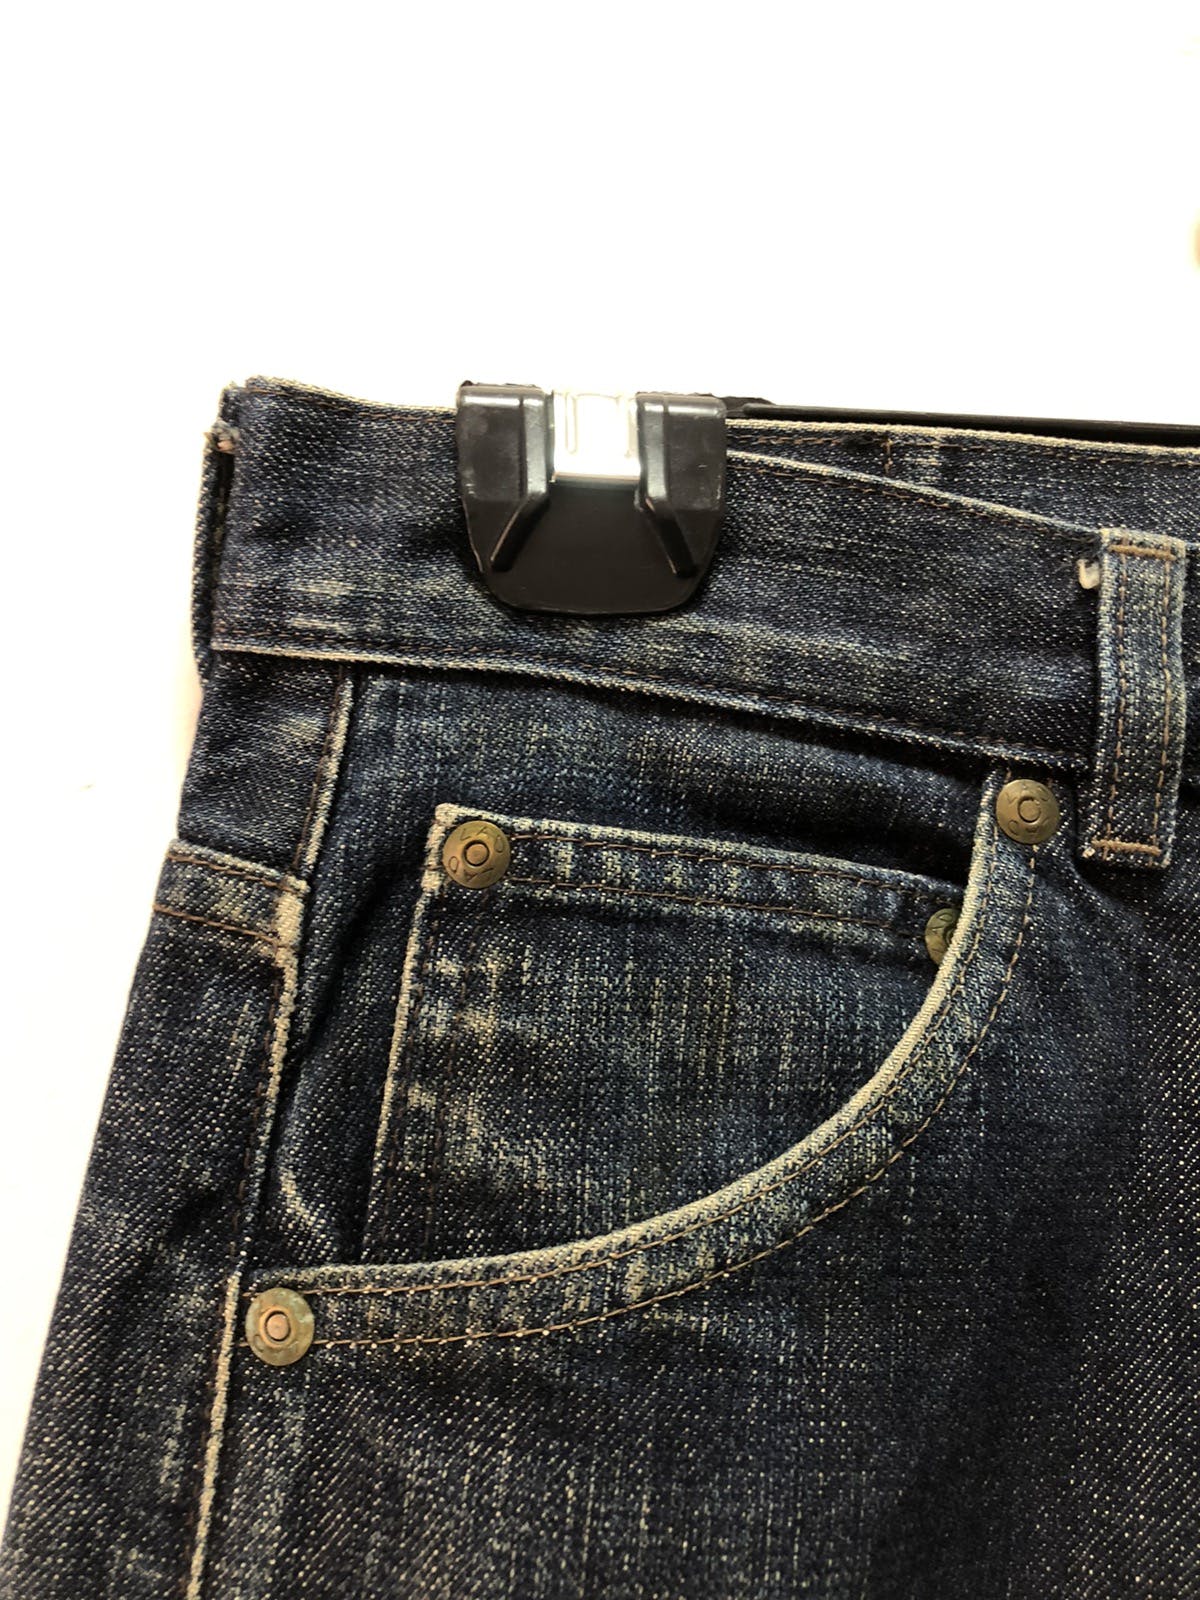 LAD MUSICIAN Denim Pants Jeans Wear 42 Japan Made - 3